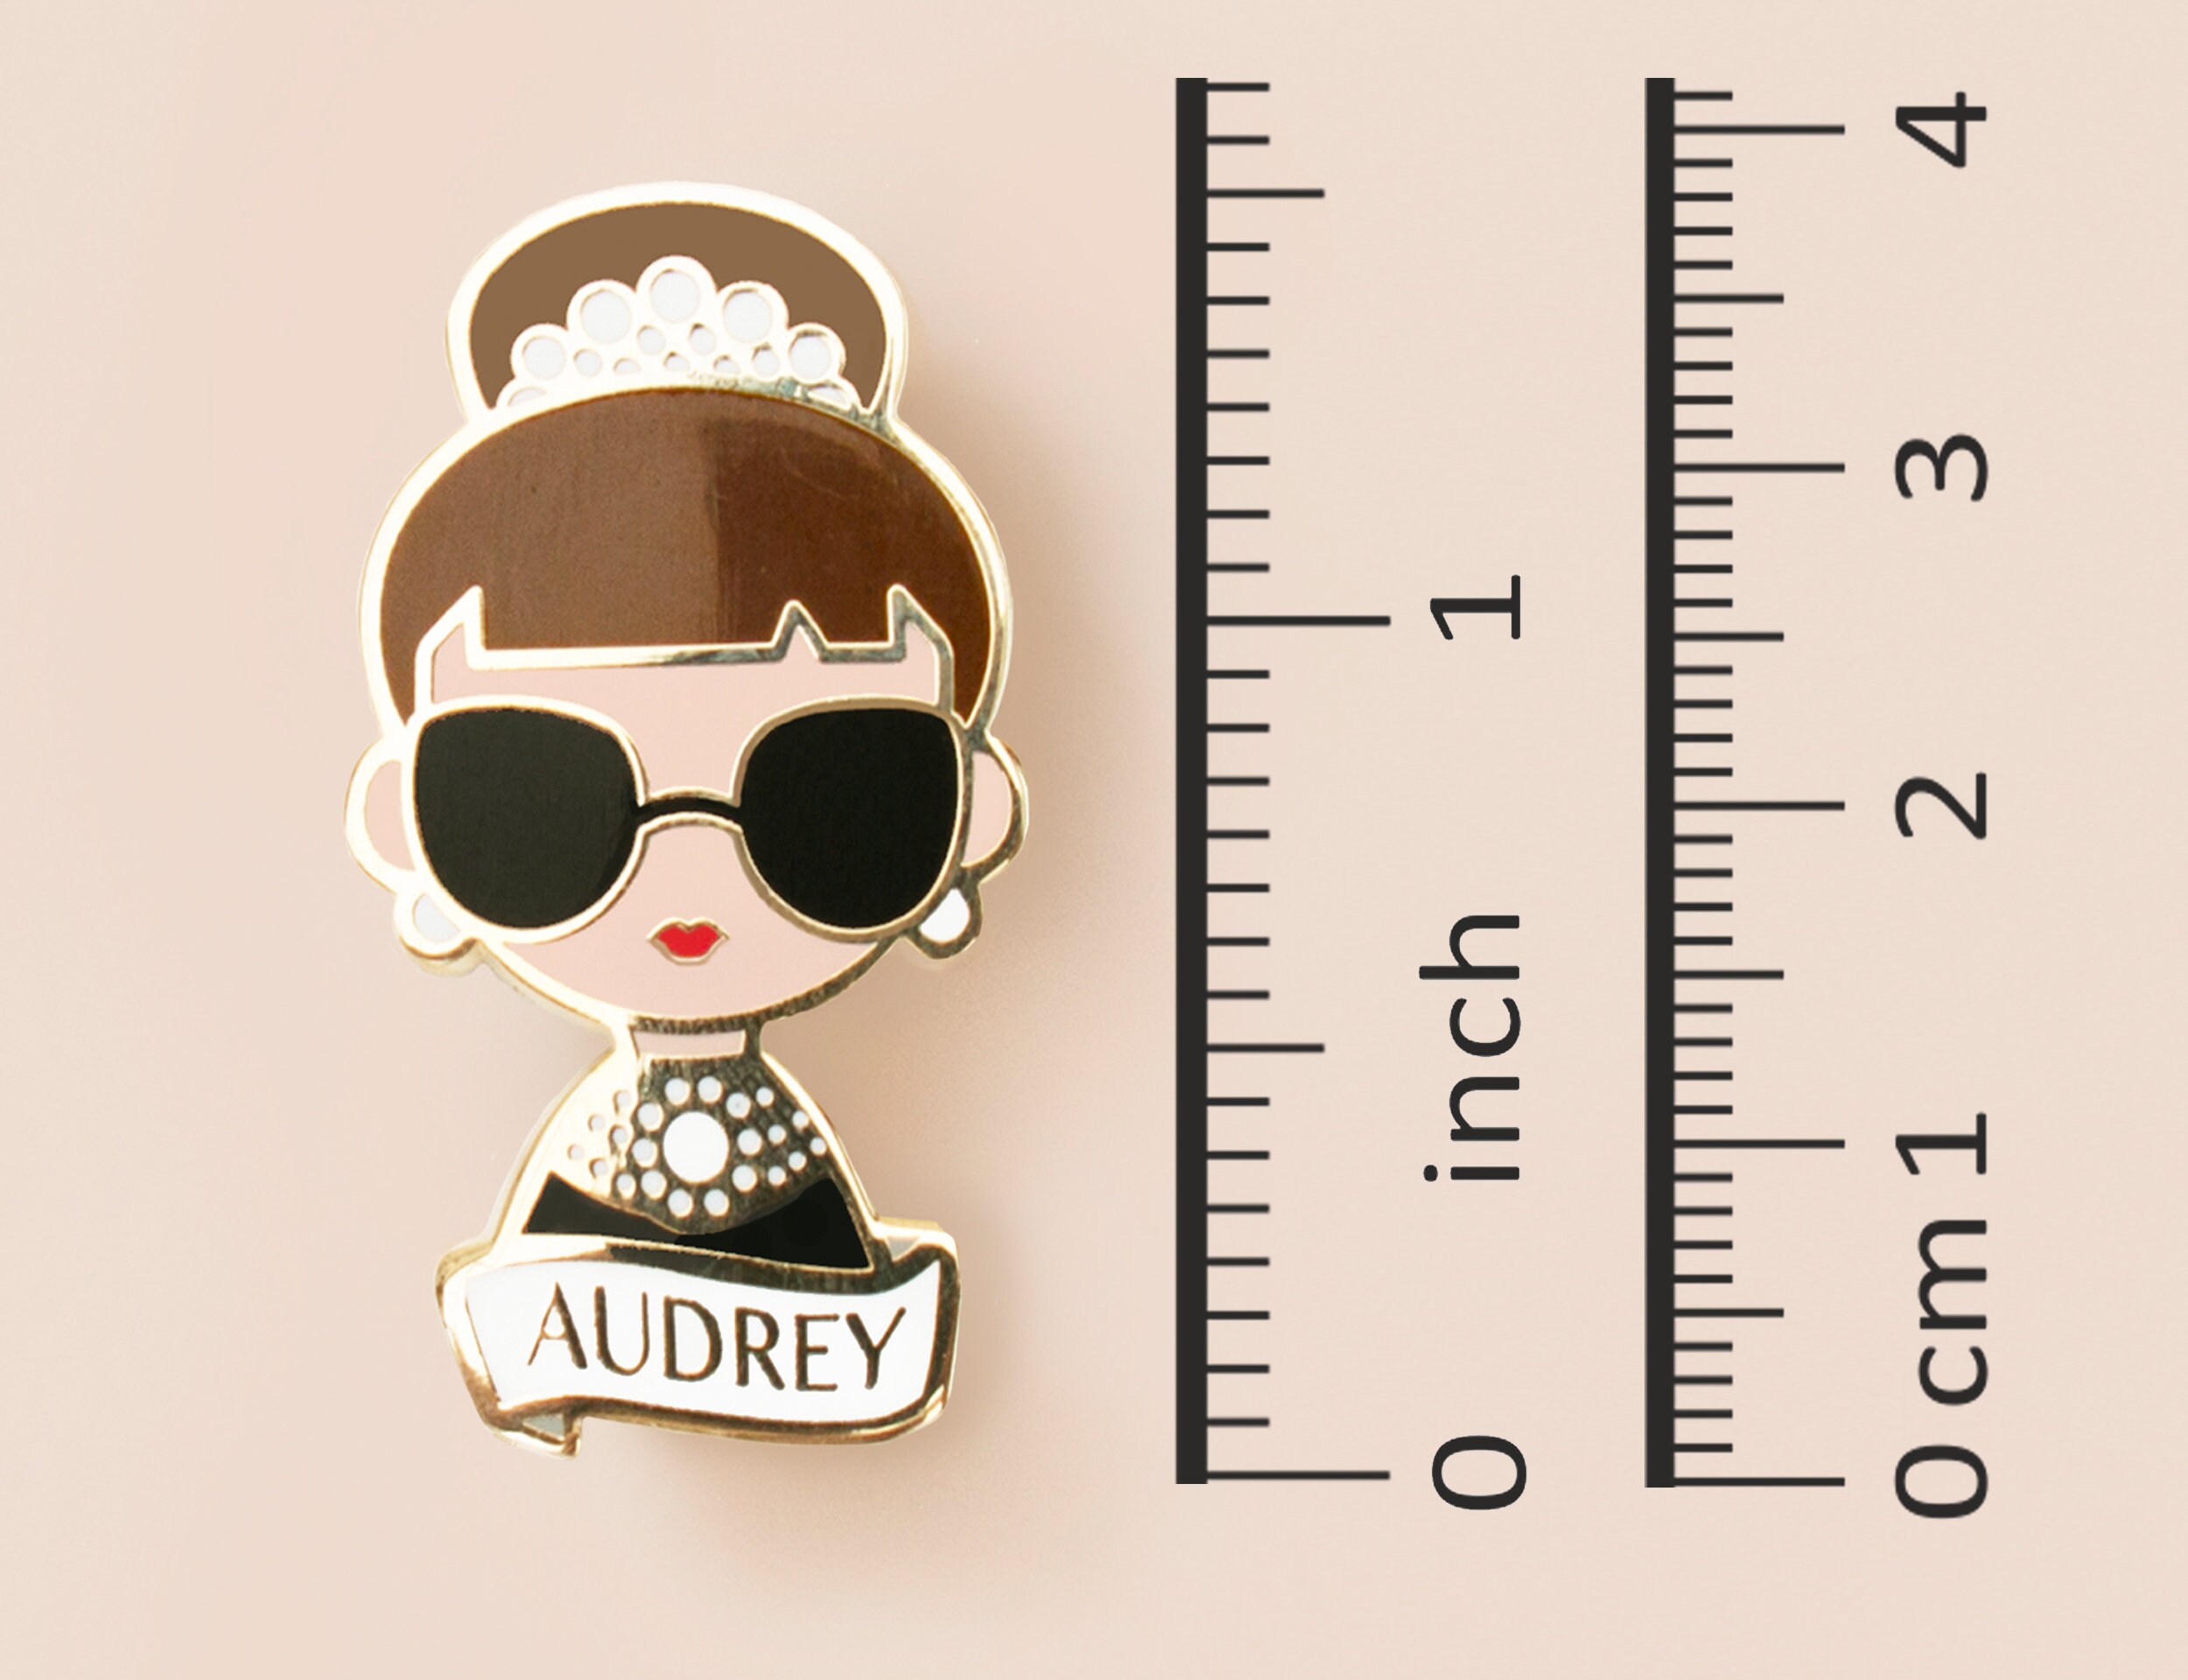 Audrey Hepburn Enamel Pin Brooch Bestseller Jewellery Brooches Pins & Clips Brooches 